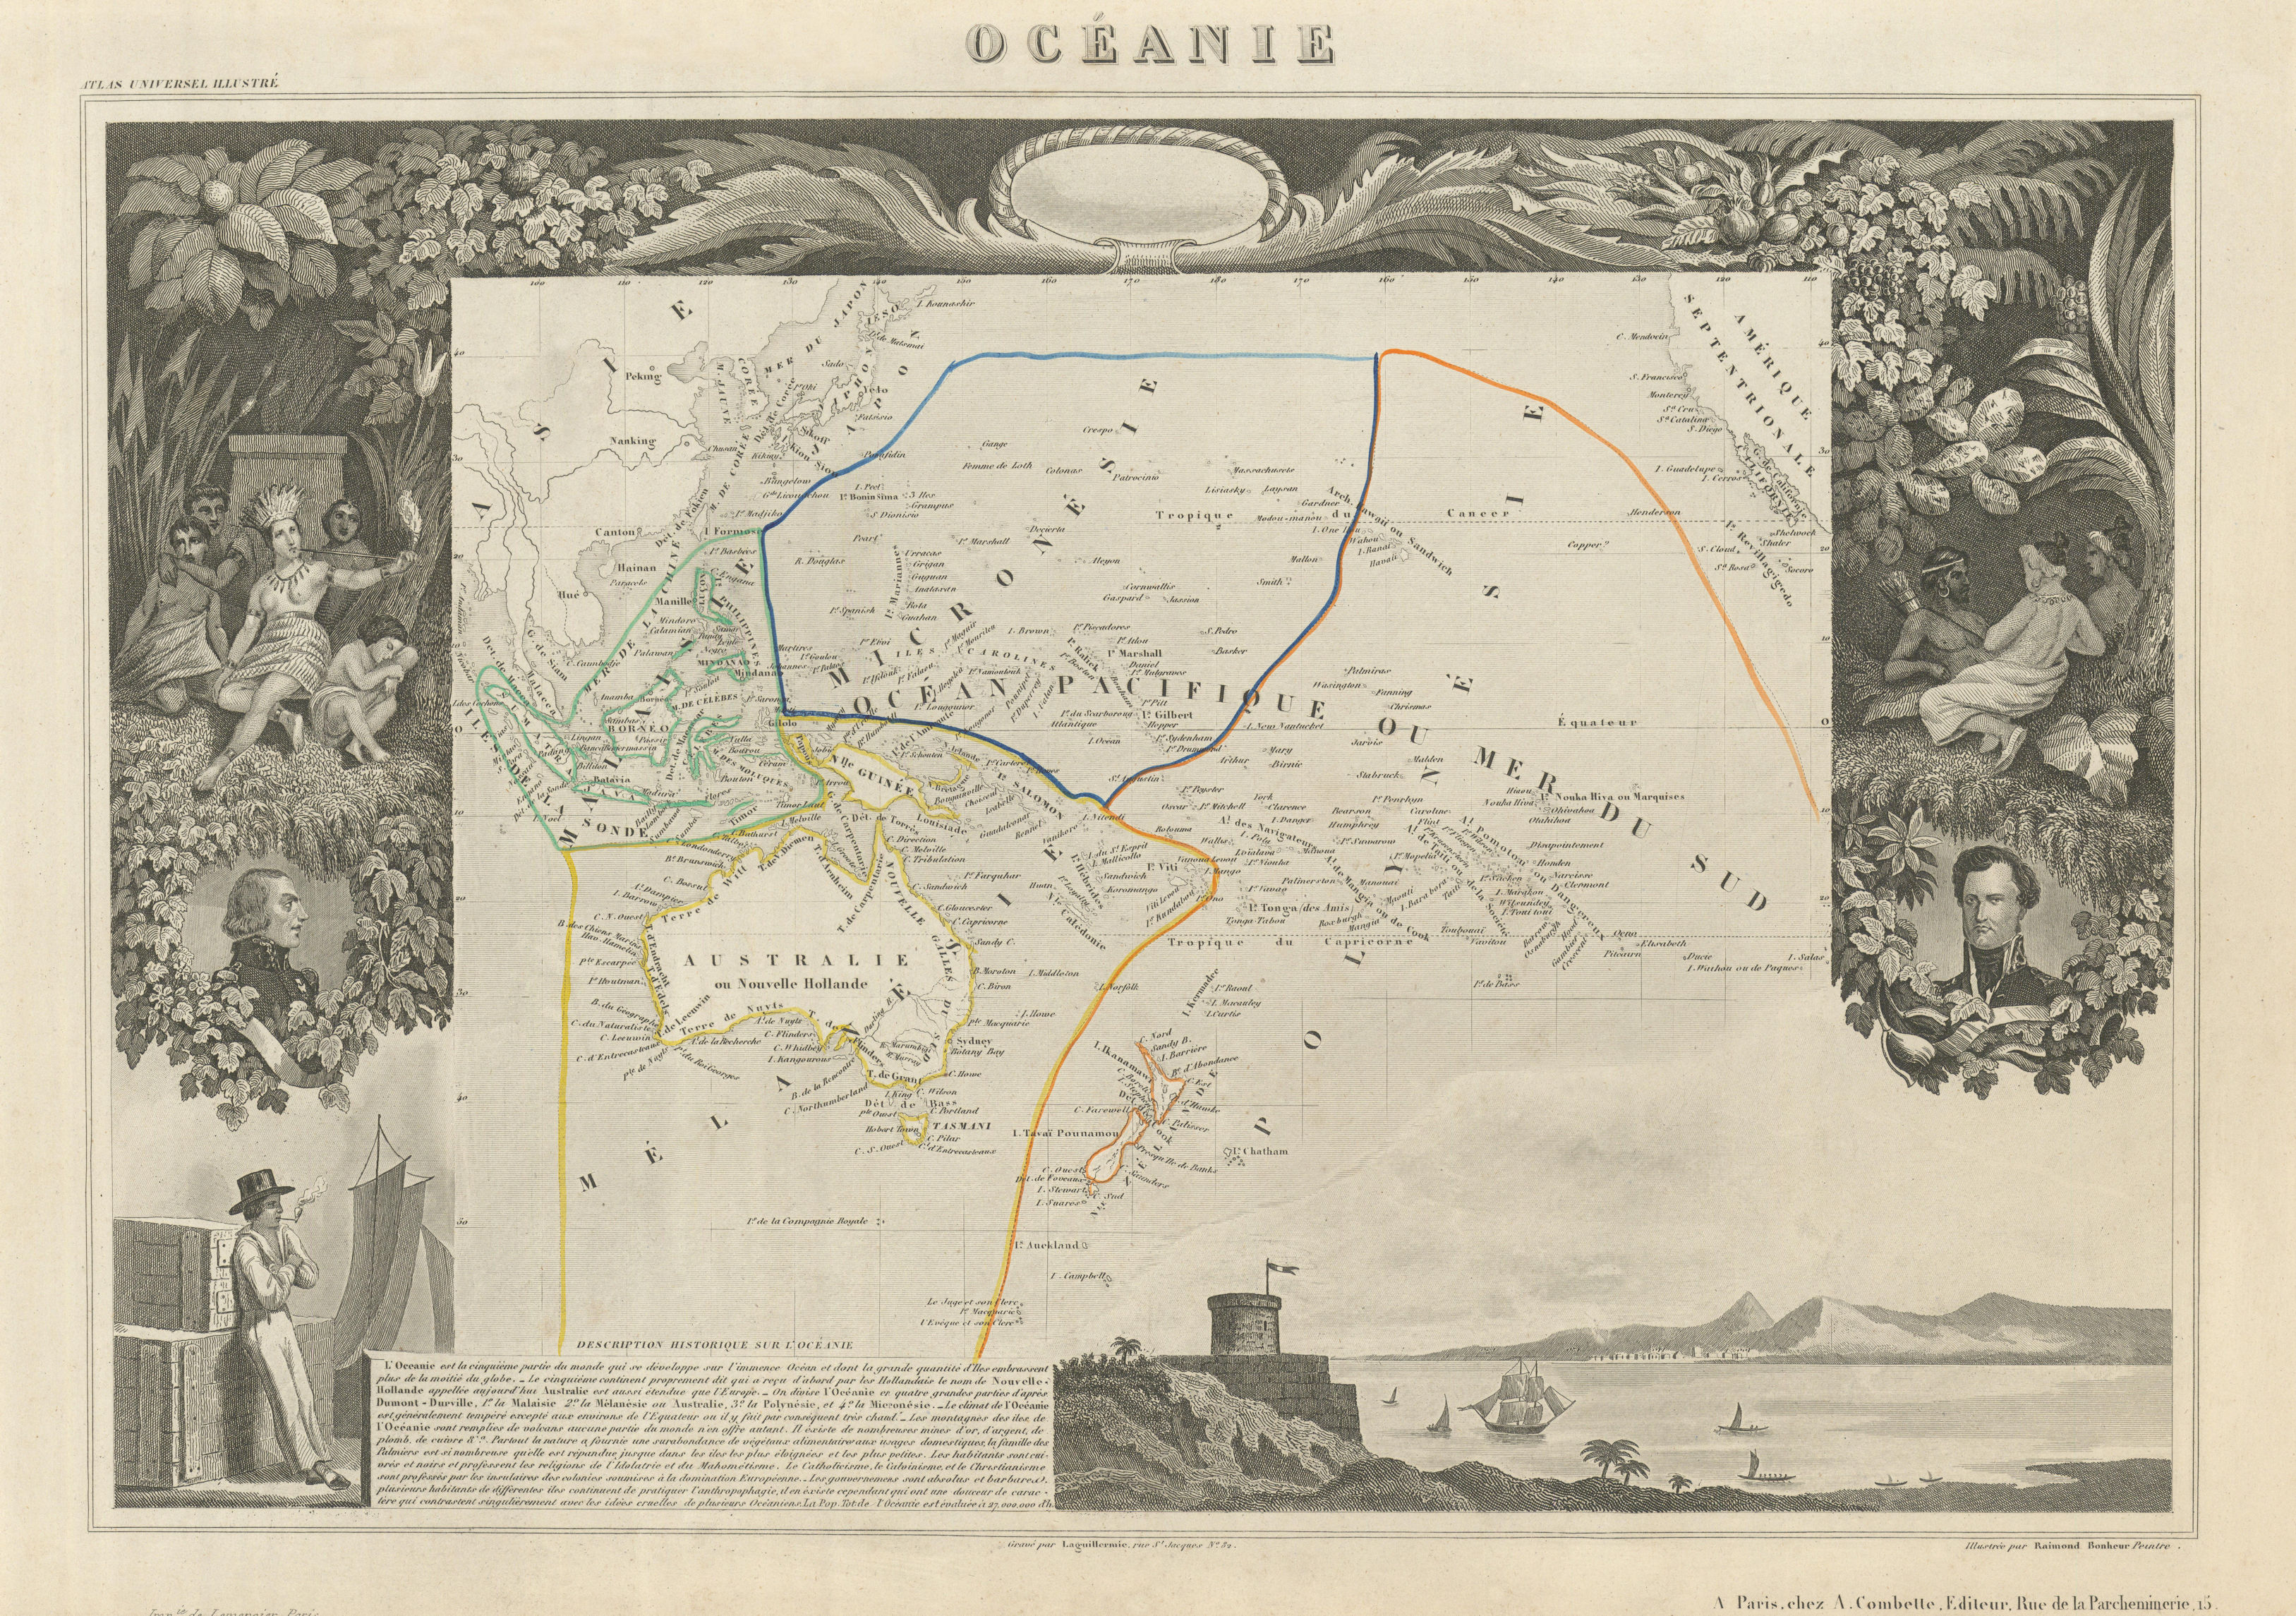 Associate Product OCEANIE. Oceania. Australia New Zealand. Antique map/carte. LEVASSEUR 1856